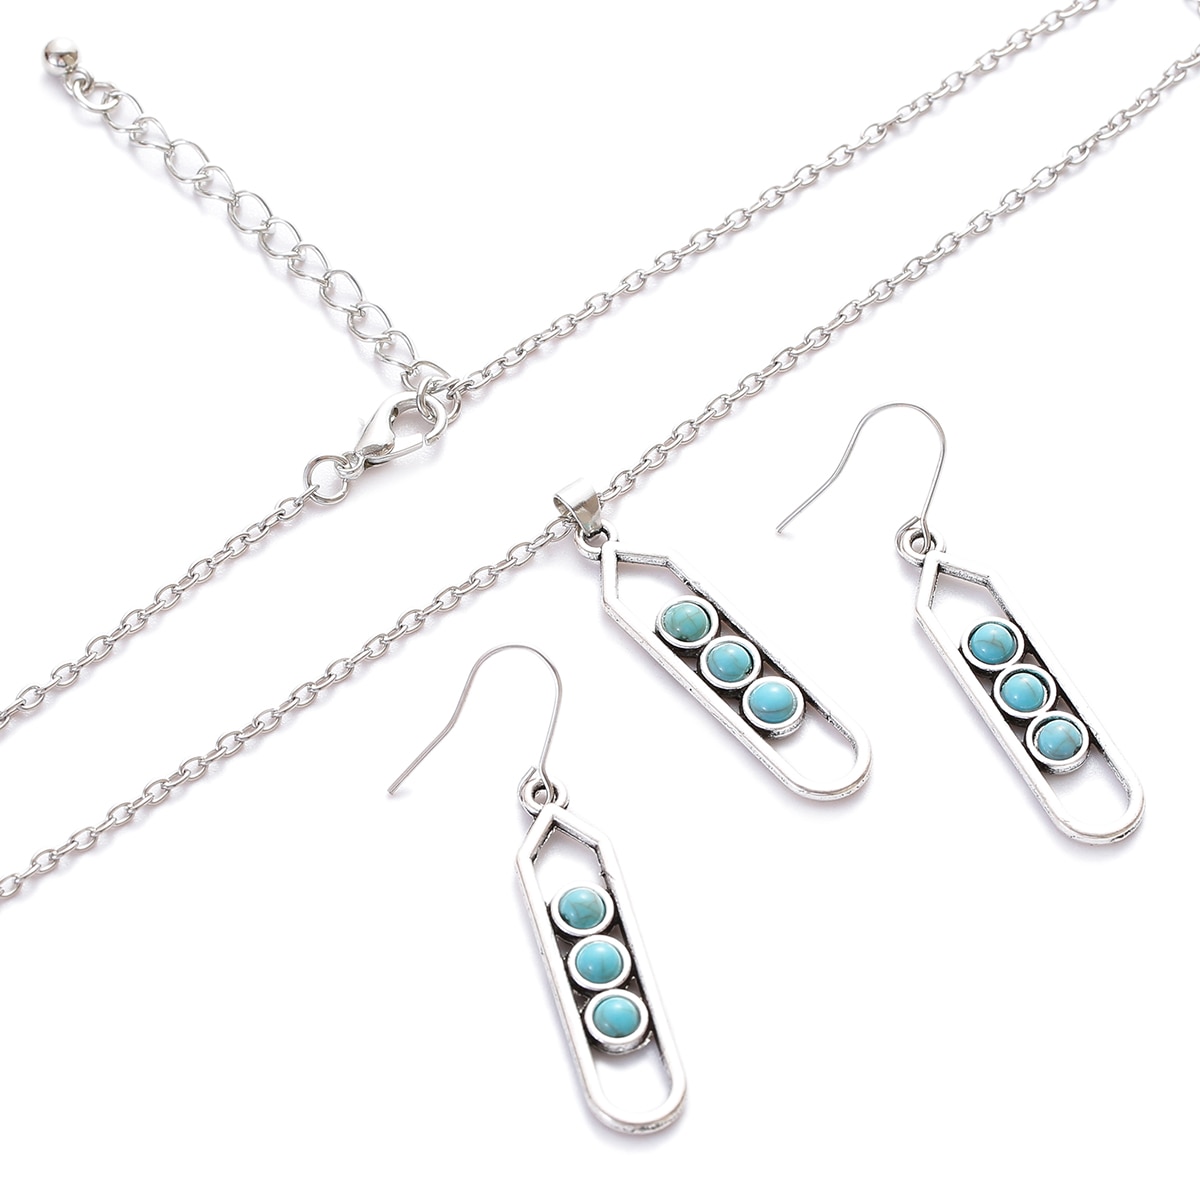 Boho-Beads-Jewelry-Set-Bijoux-Water-Drop-Earring-Necklace-Set-Bridal-Wedding-Jewelry-Hangers-Turquoi-1005004504616004-8